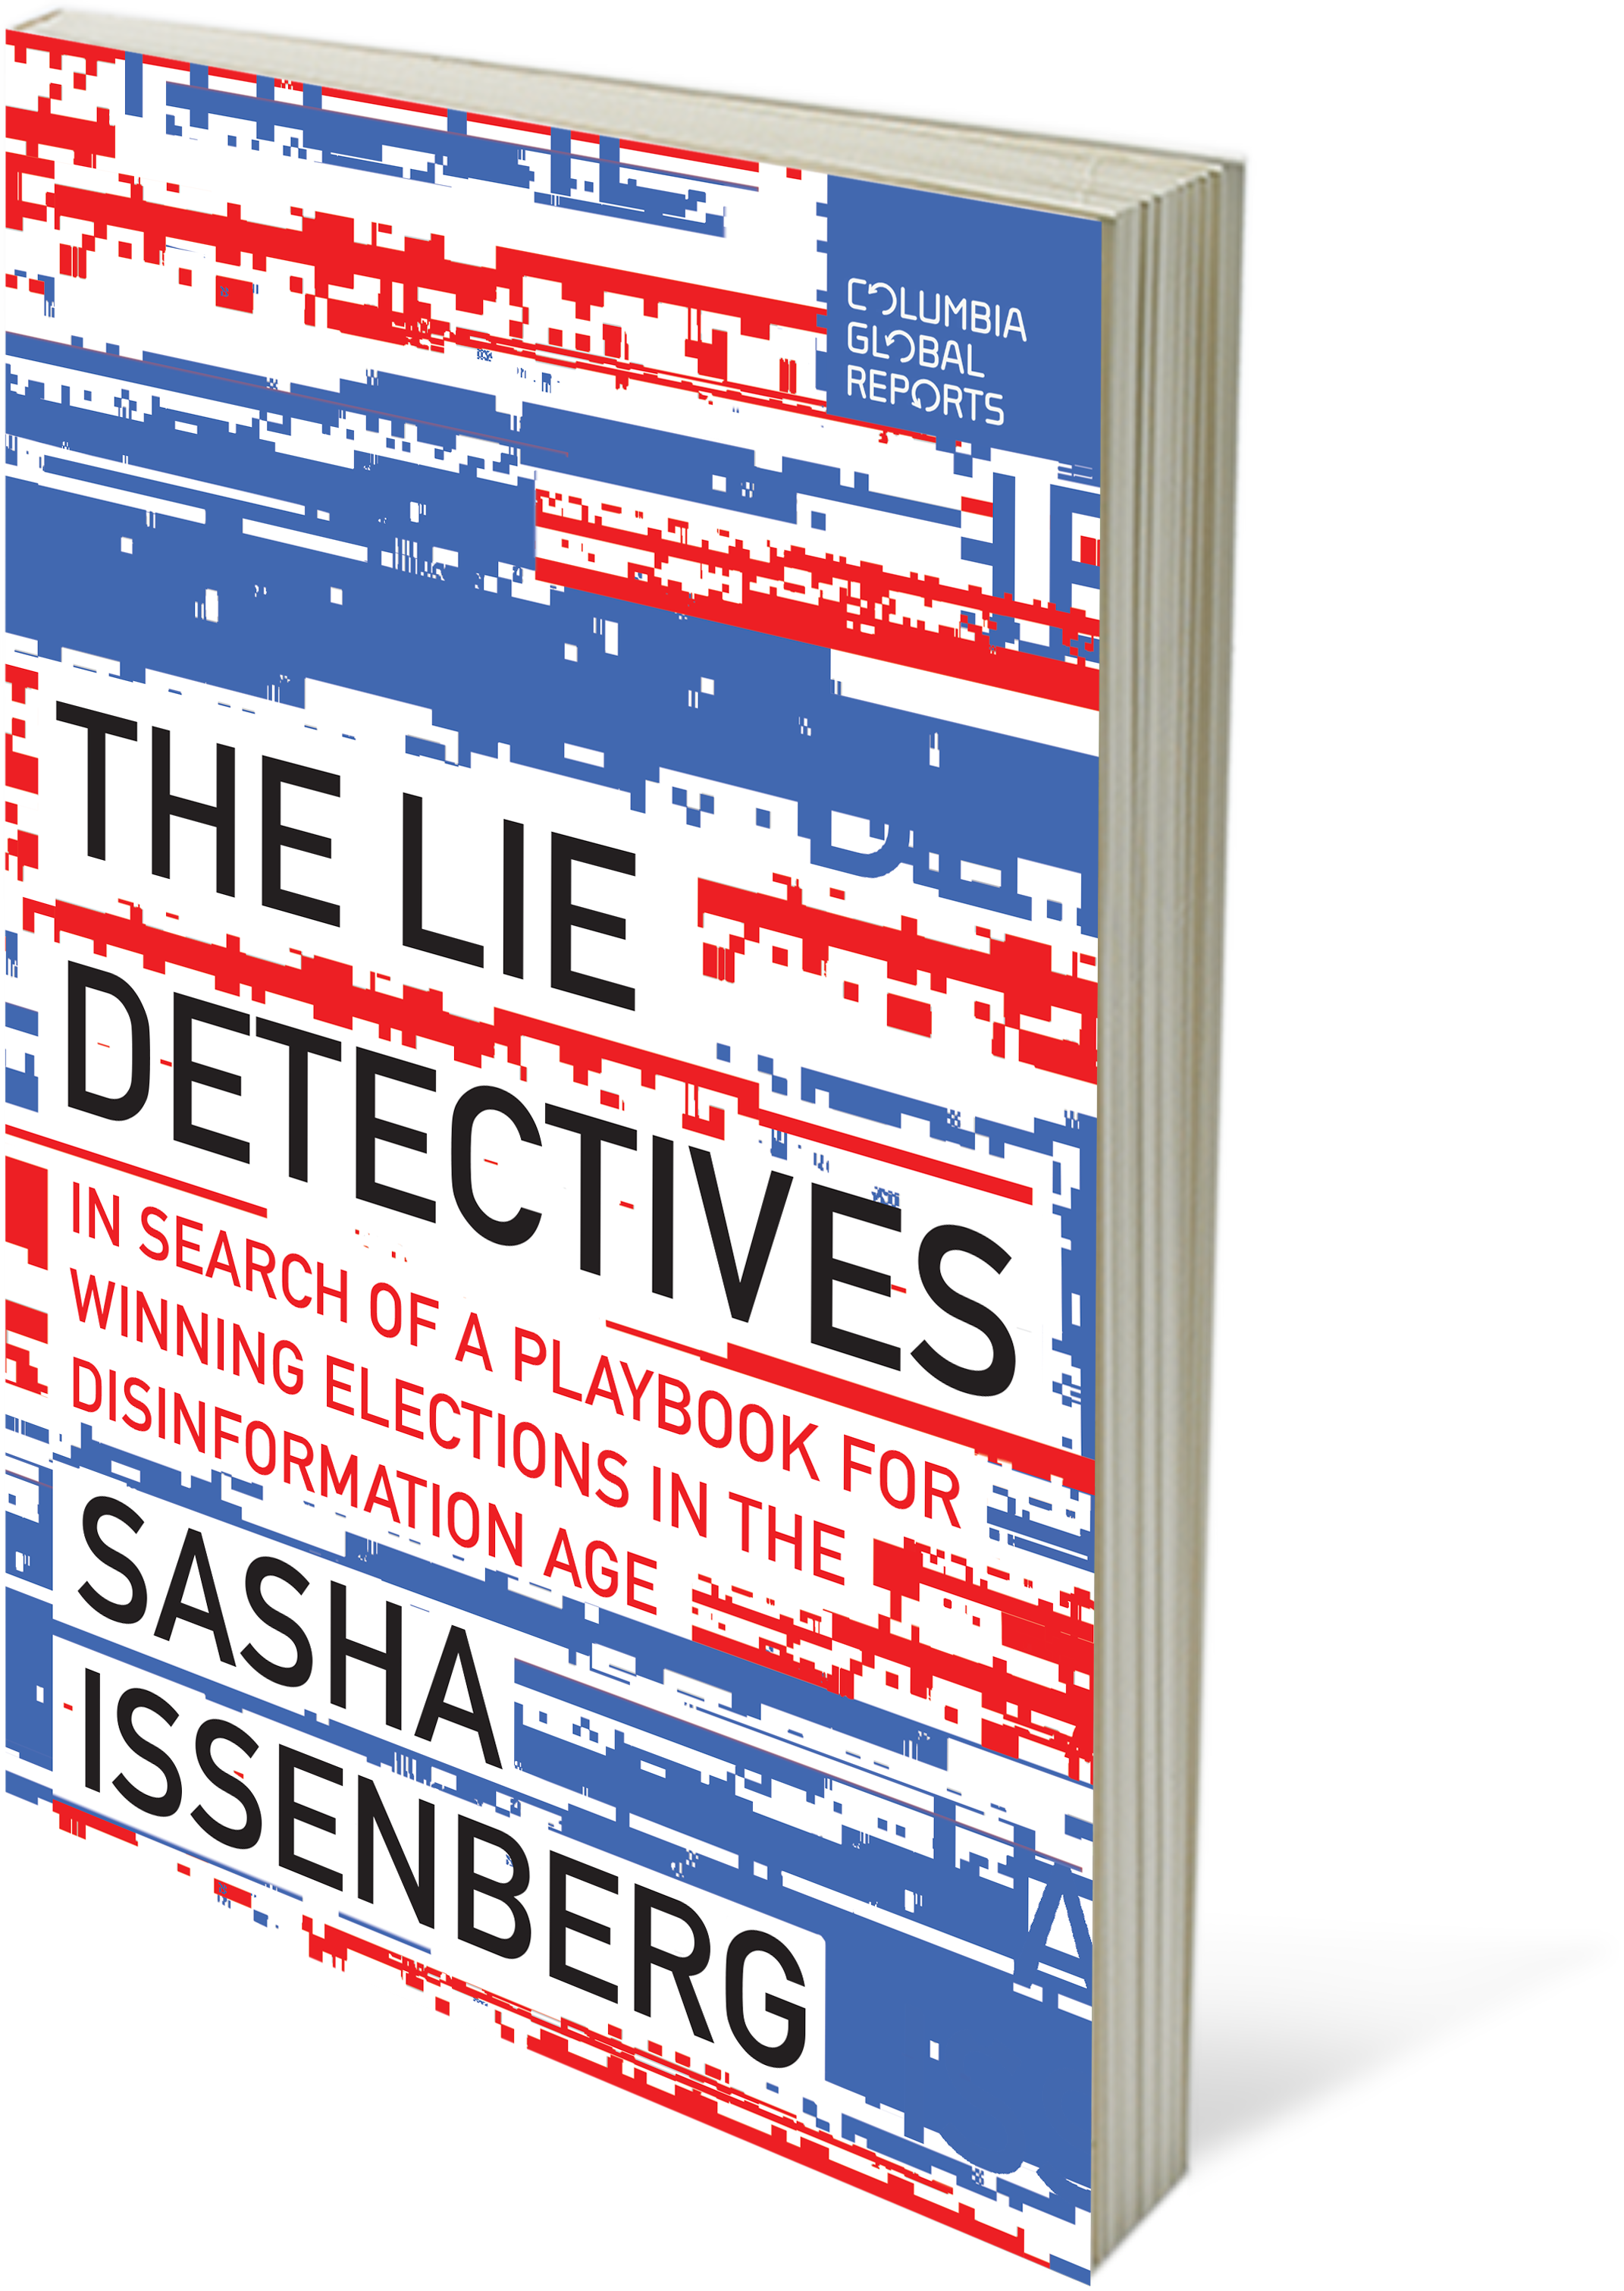 The Lie Detectives